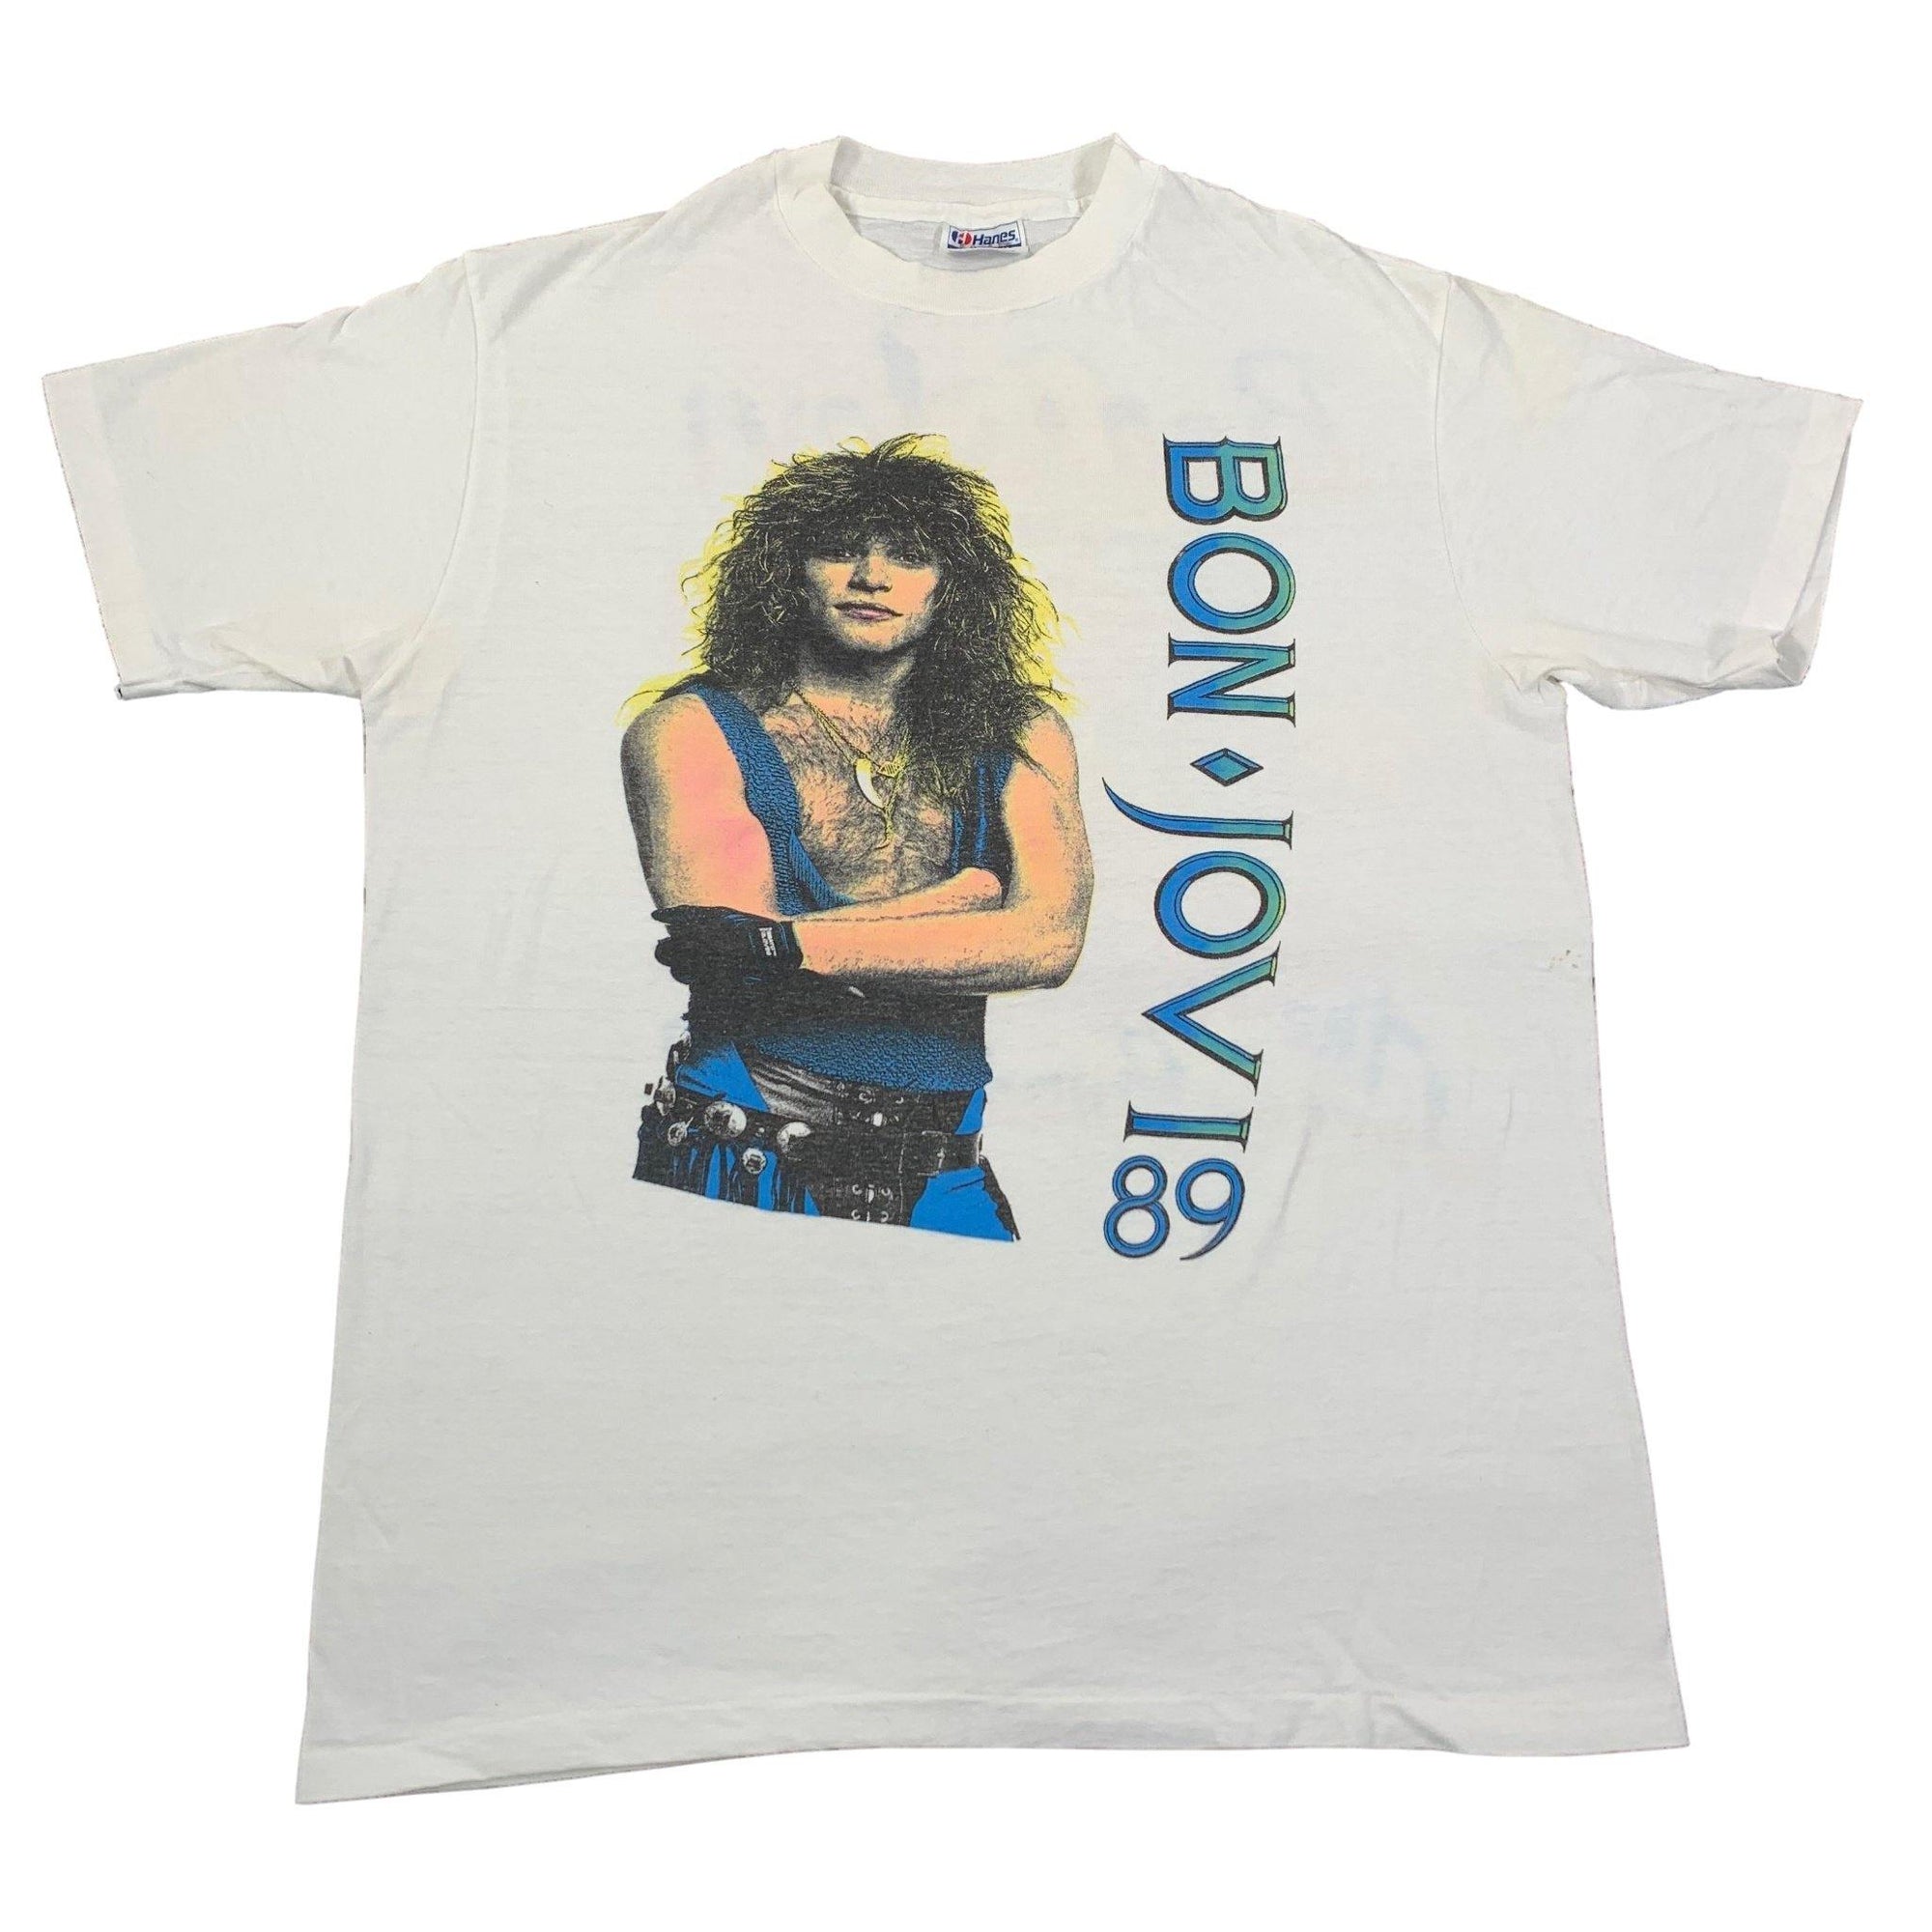 Vintage Bon Jovi "The Jersey Syndicate" T-Shirt - jointcustodydc